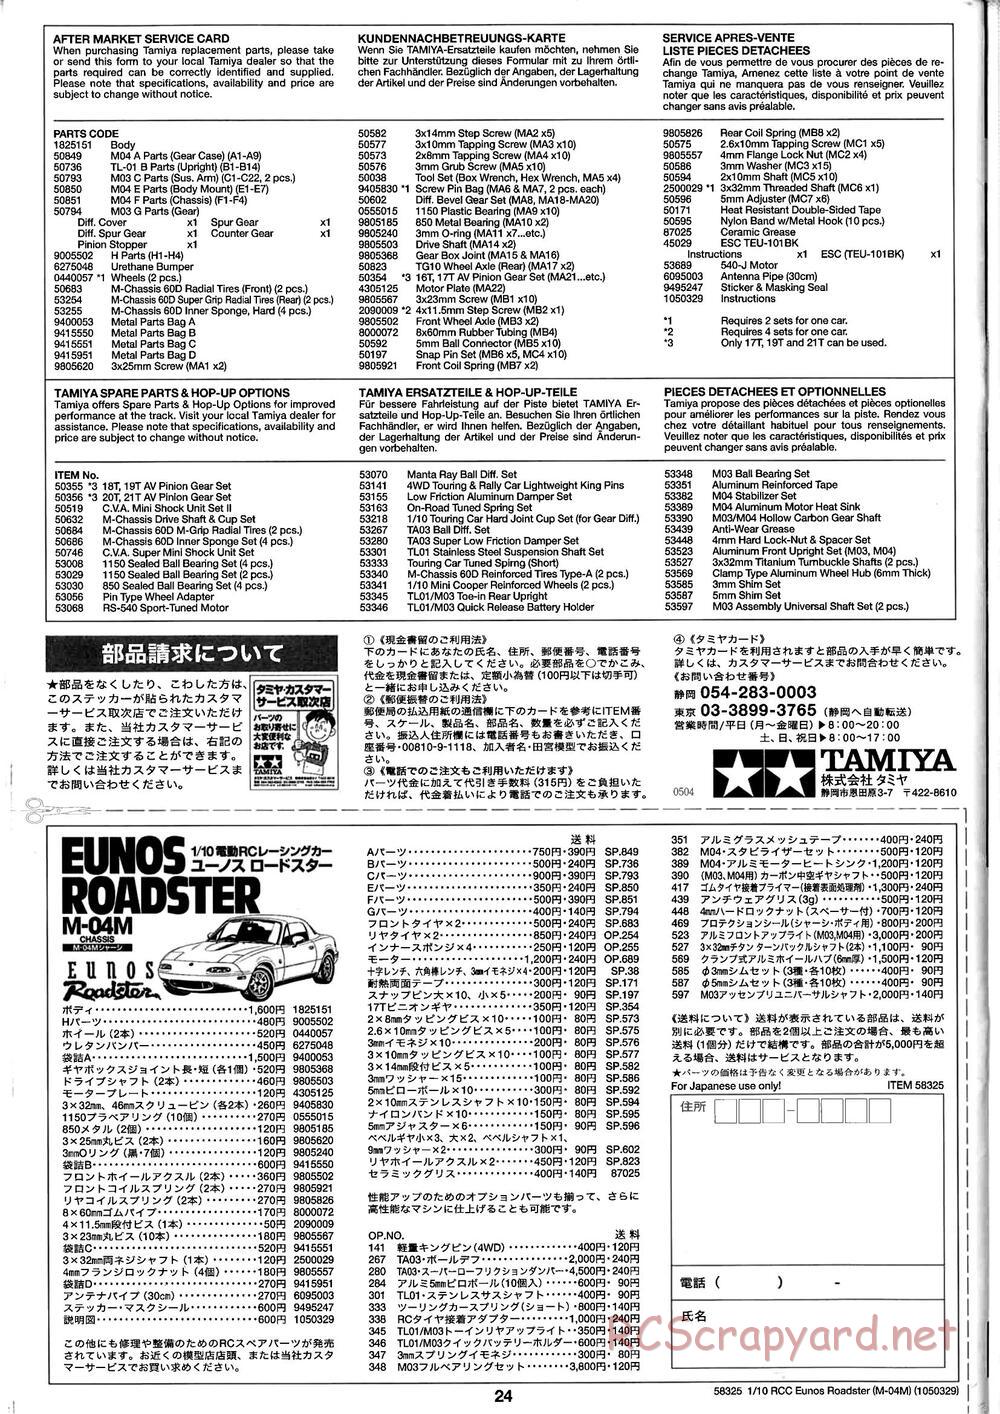 Tamiya - Eunos Roadster - M04M Chassis - Manual - Page 24